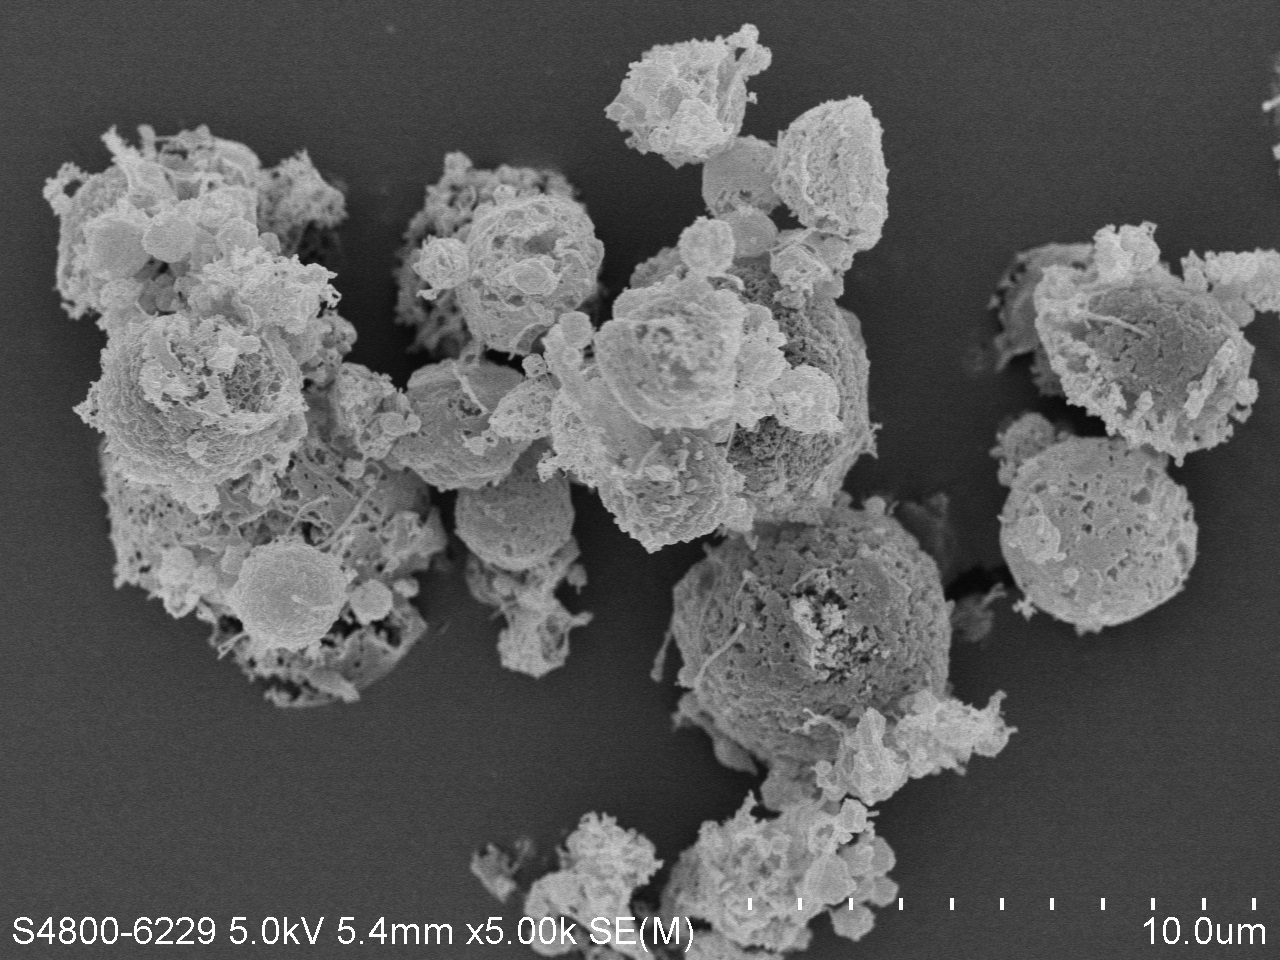 SEM image of inhaled tamibarotene powder formulation.